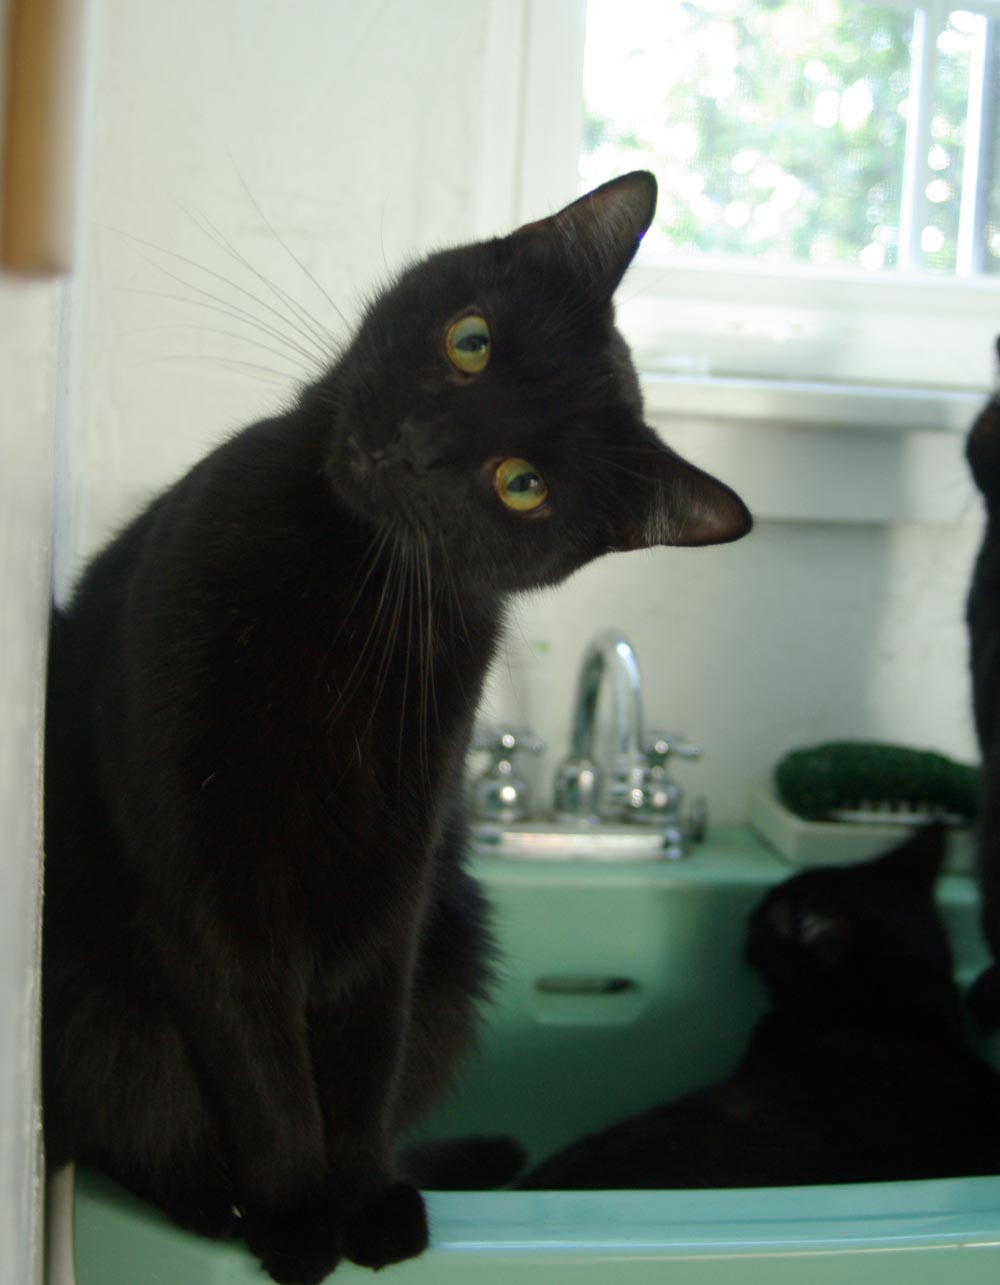 Black cat on sink tilting way sideways